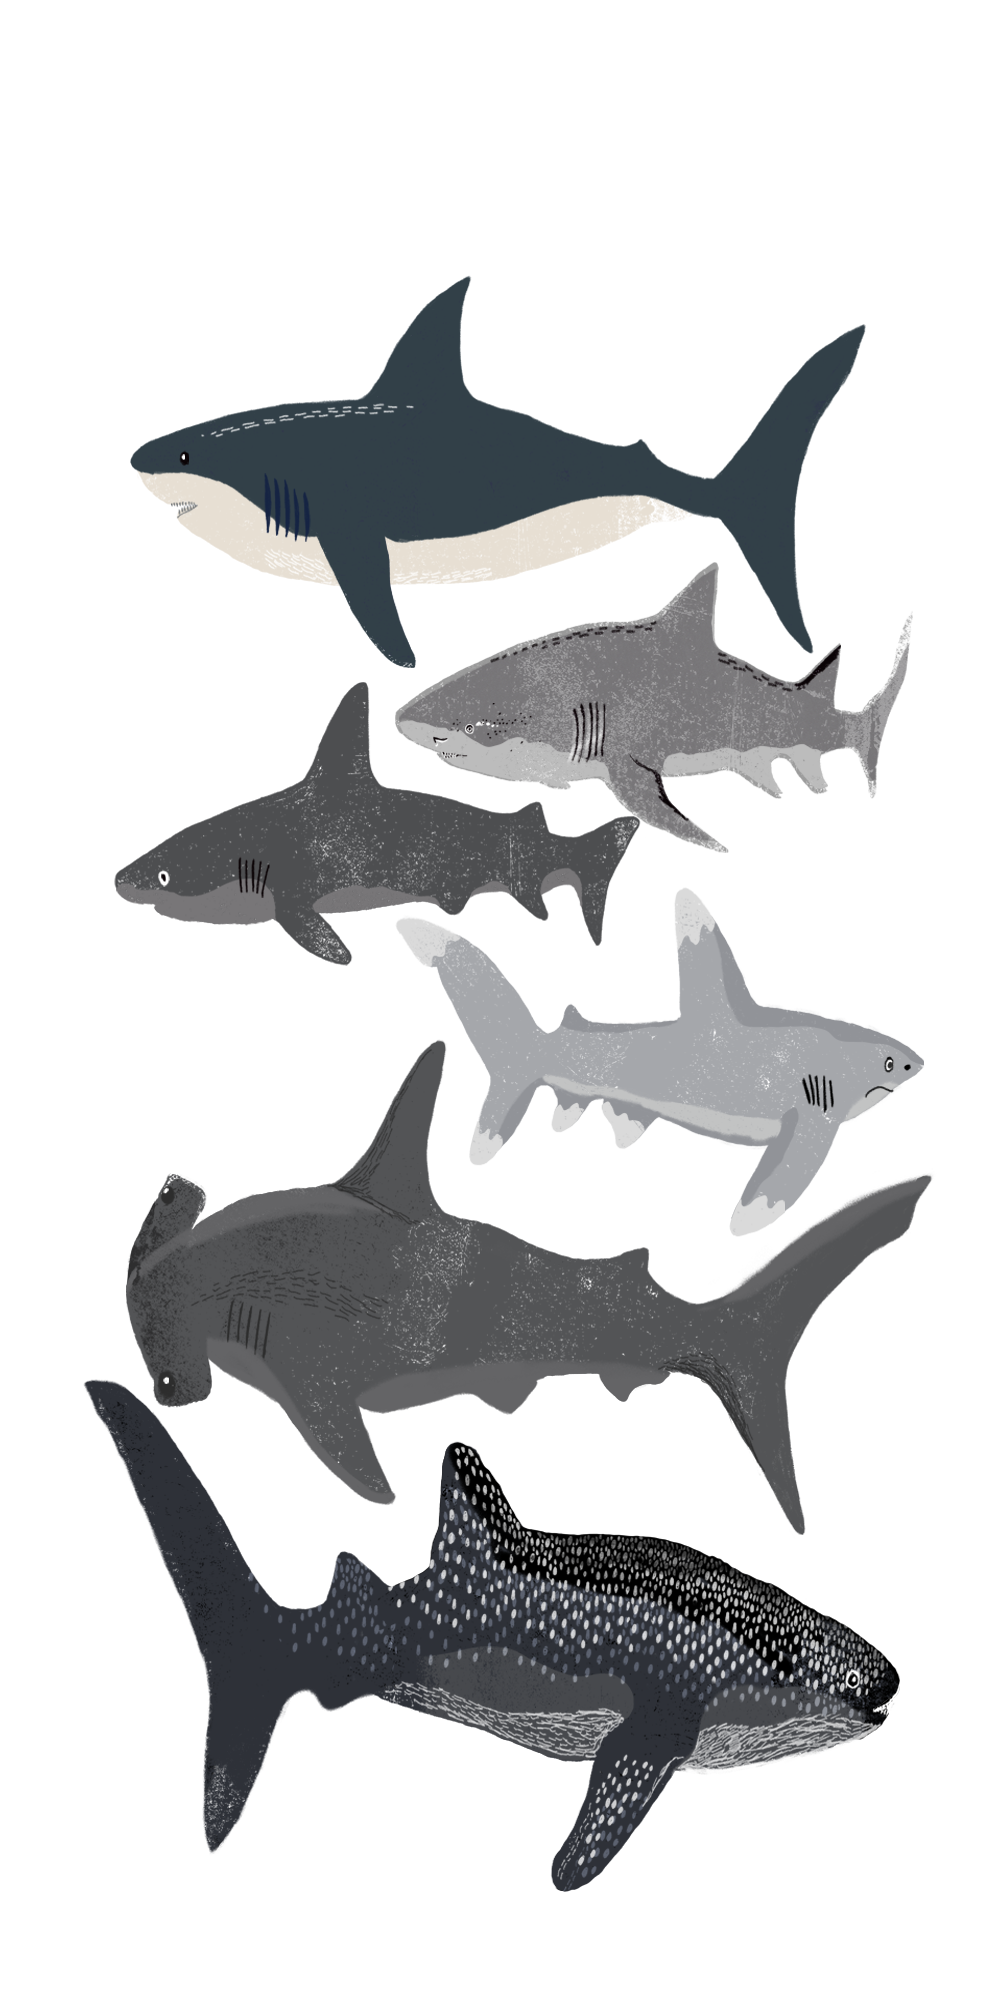 Casetify #iPhone #Art #Design #Illustration #Nature #Animals. Shark wallpaper iphone, iPhone art, Shark art